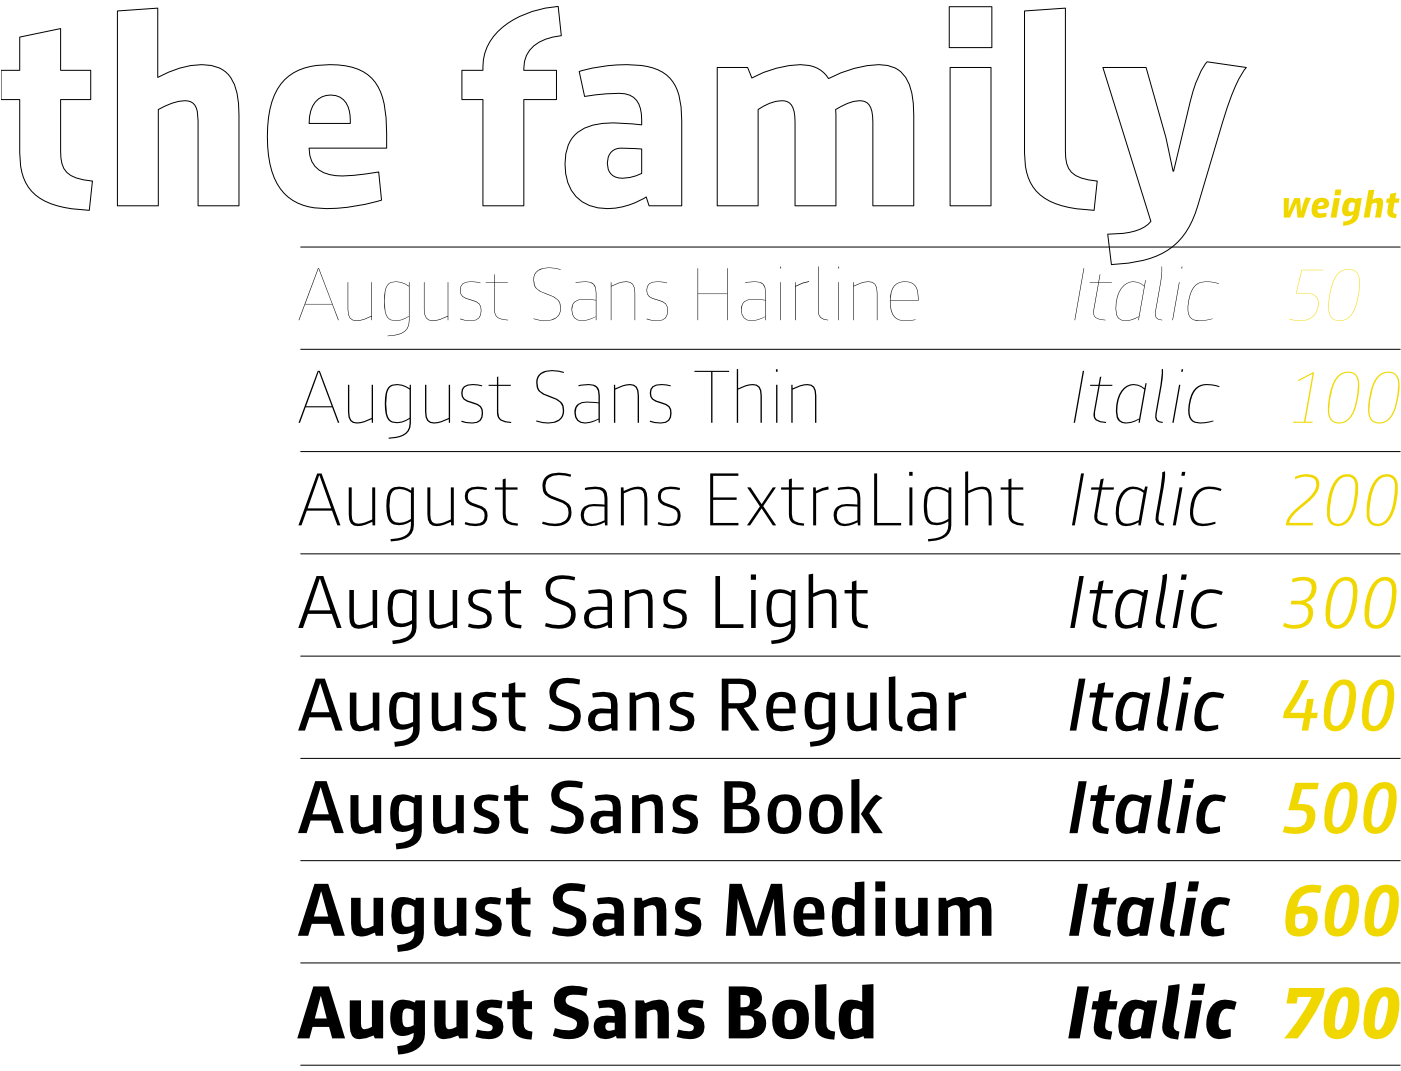 August Sans - the font family